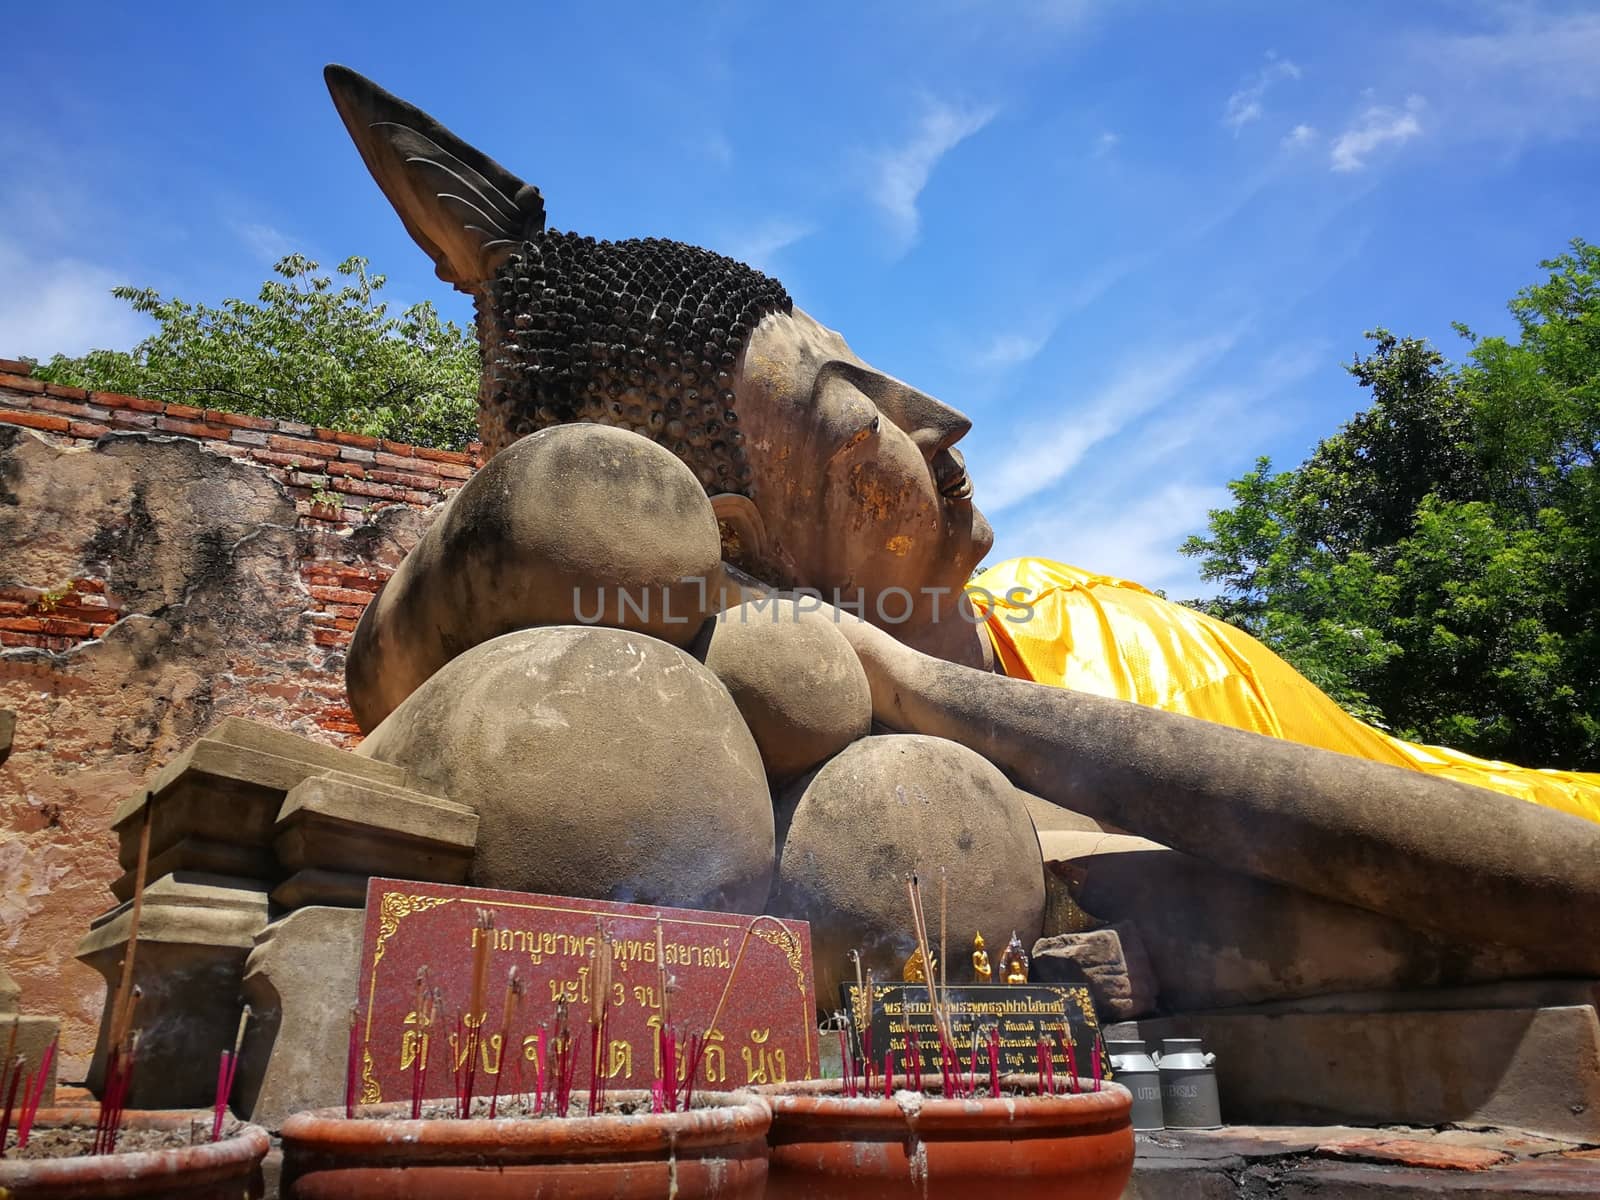 A beautiful Thailand temples, pagodas and Buddha statute by shatchaya